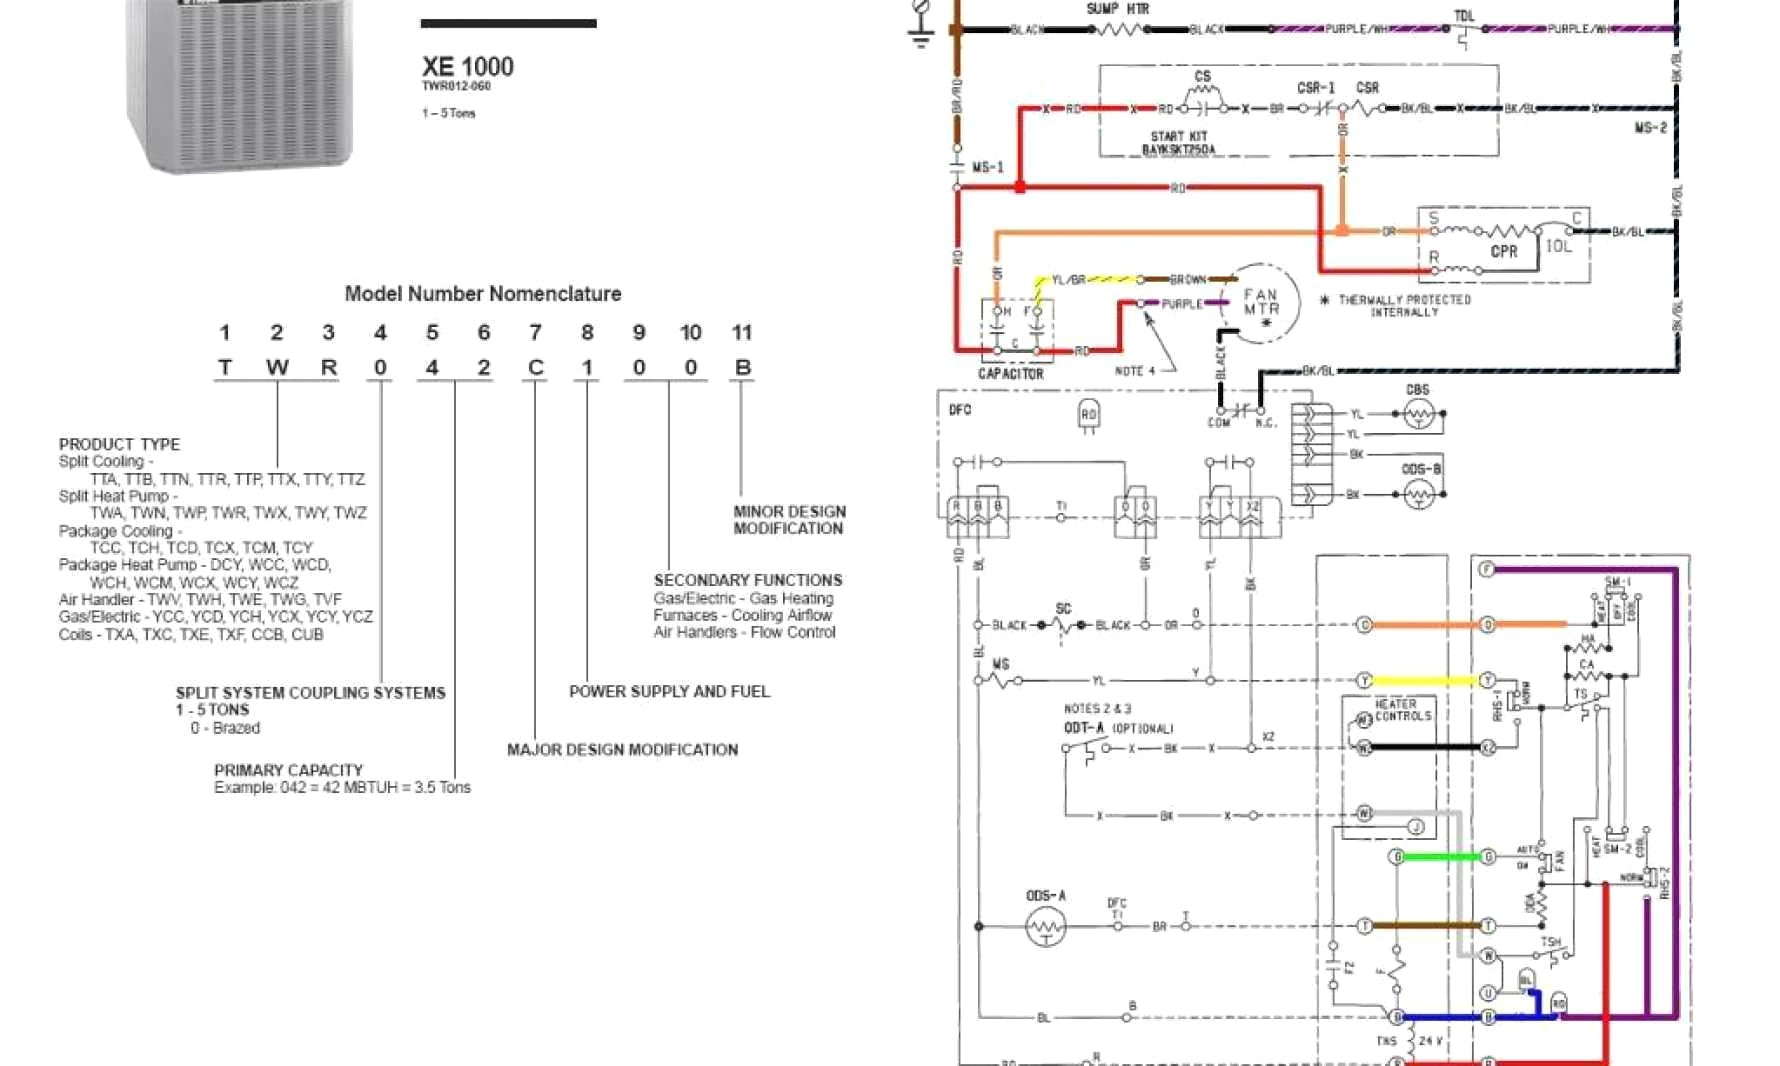 Heat Pump Thermostat Wiring Diagram Wiring Diagram For Trane Heat Pump Thermostat Wiring Diagram Database